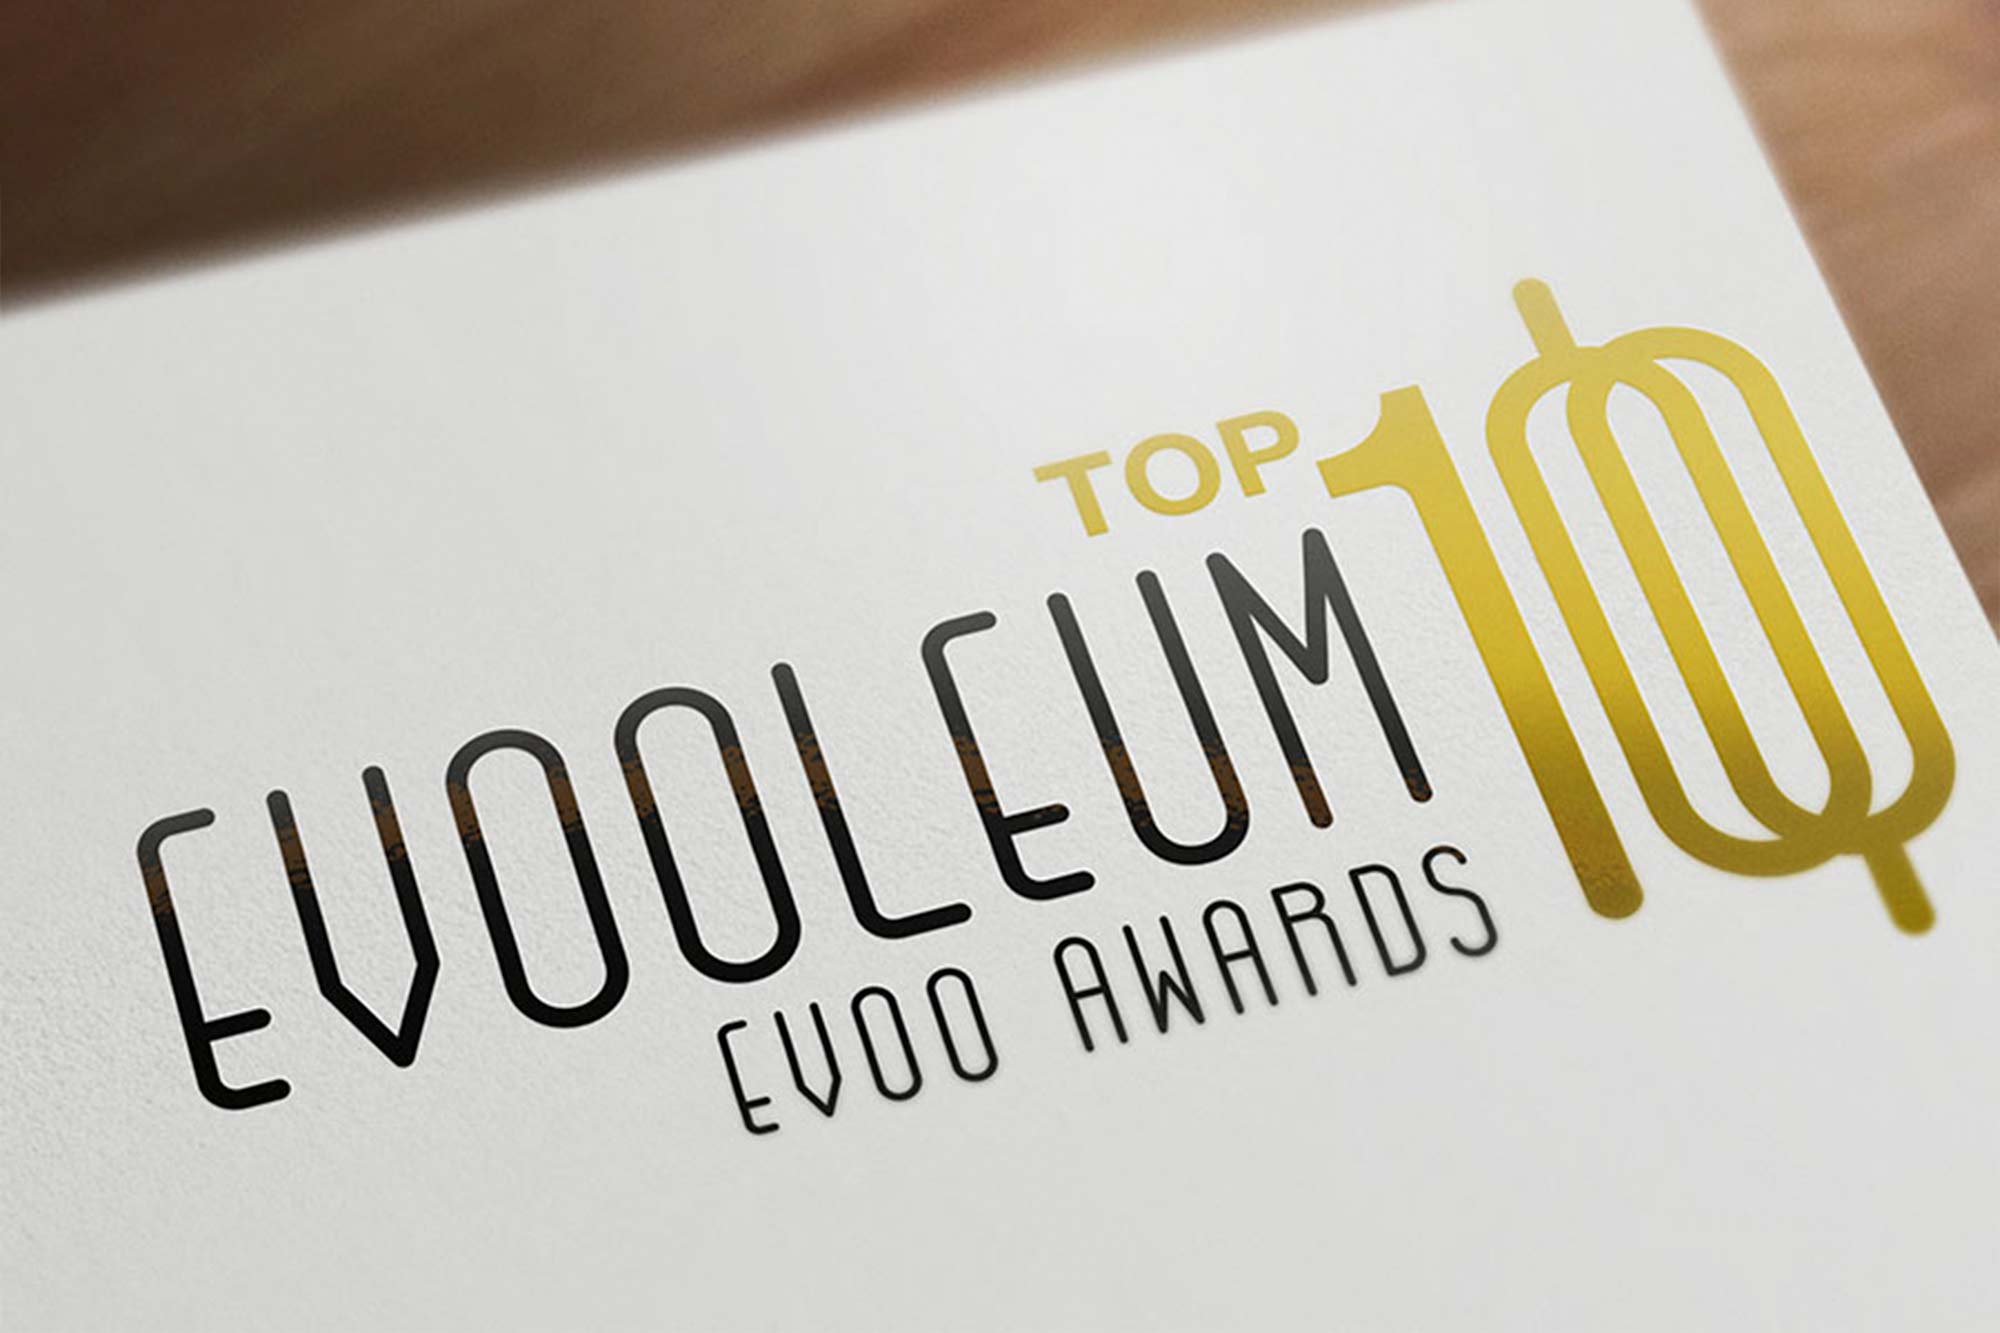 Mejores aceites del mundo según la prestigiosa Guía Evooleum - meilleures huiles d olive du monde | Torrent Closures